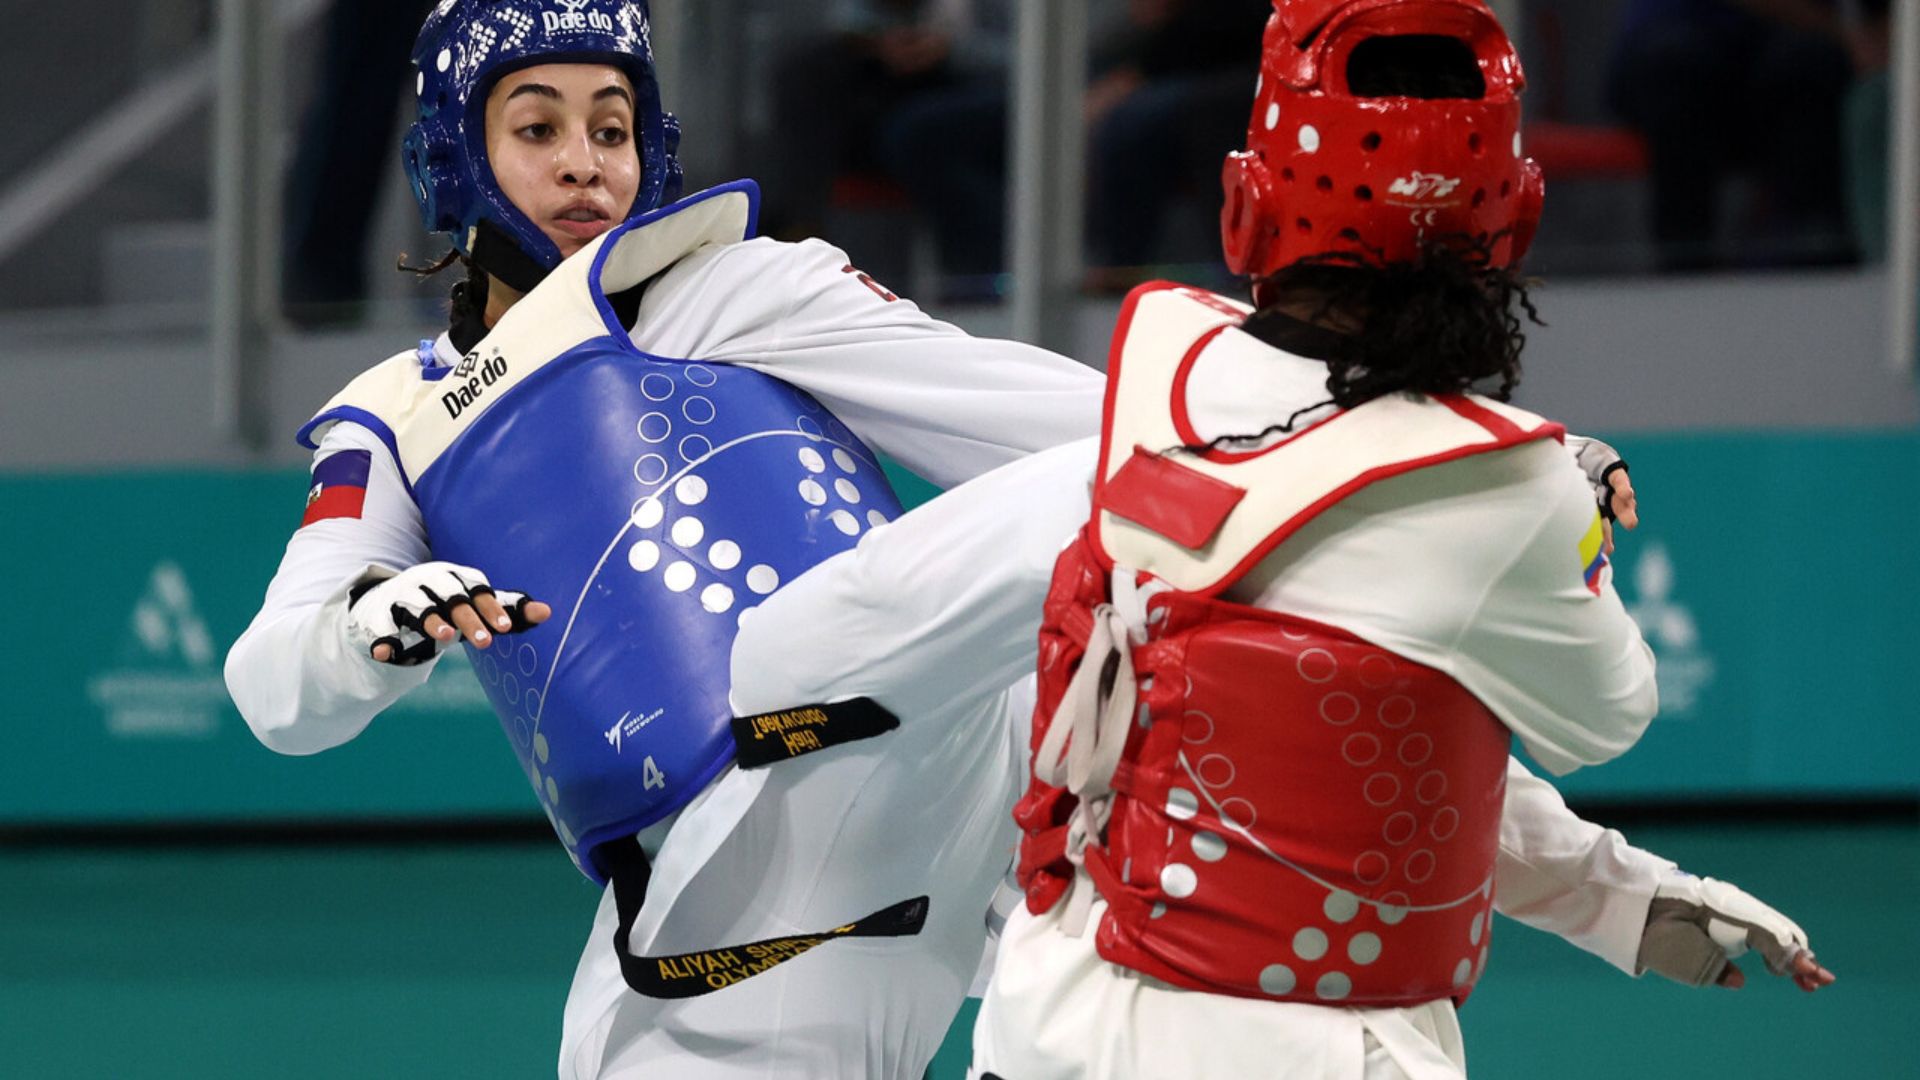 Haití sigue haciendo historia en taekwondo sumando una segunda medalla